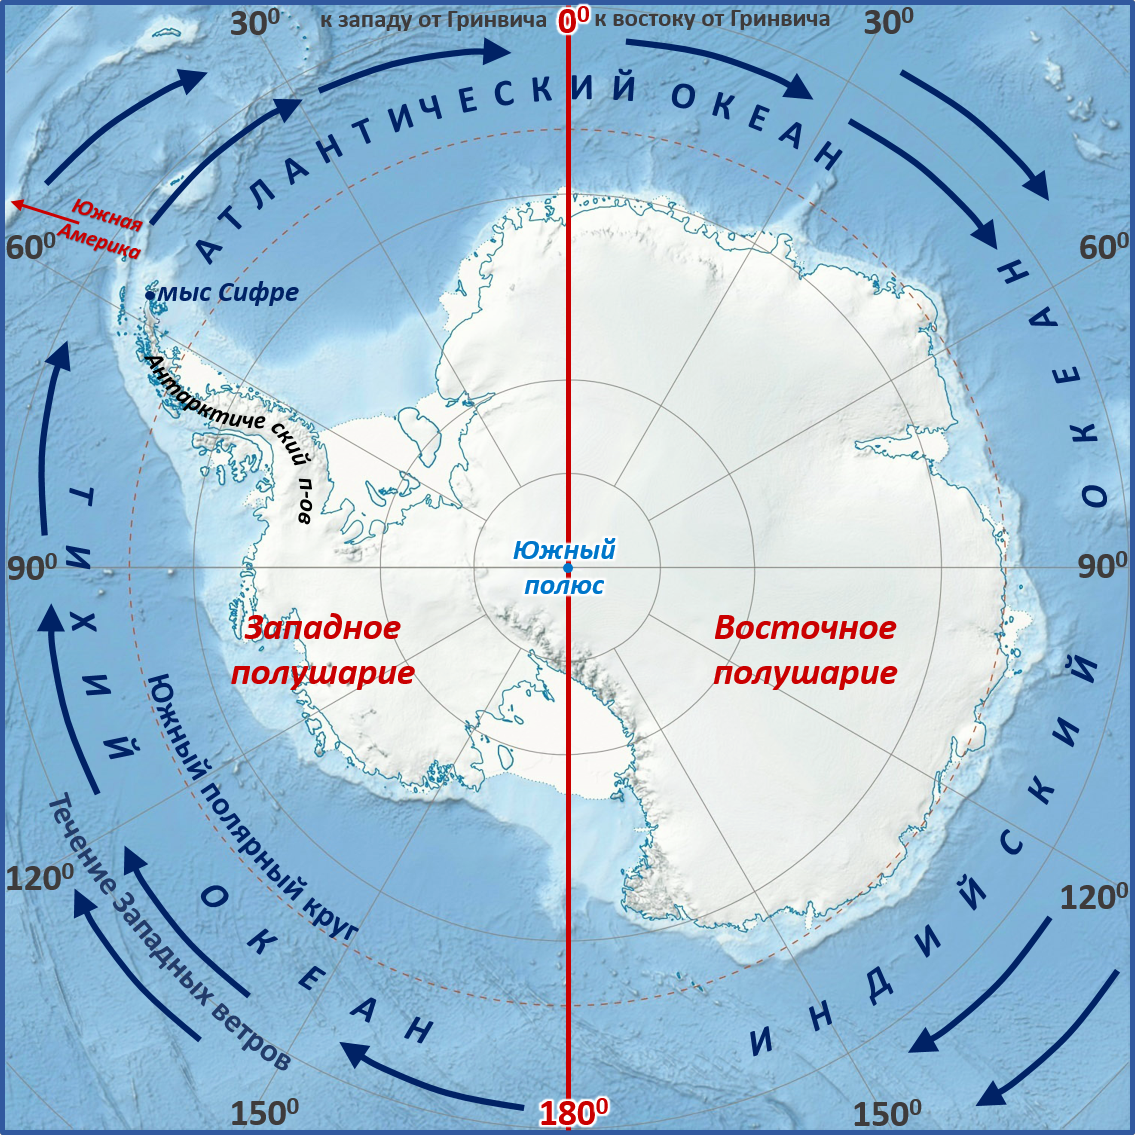 Мыс Сифре на карте Антарктиды. Моря: Амундсена, Беллинсгаузена, Росса, Уэдделла.. Мыс Сифре Антарктида. Южный полюс на карте Антарктиды. Какой океан в южном полушарии